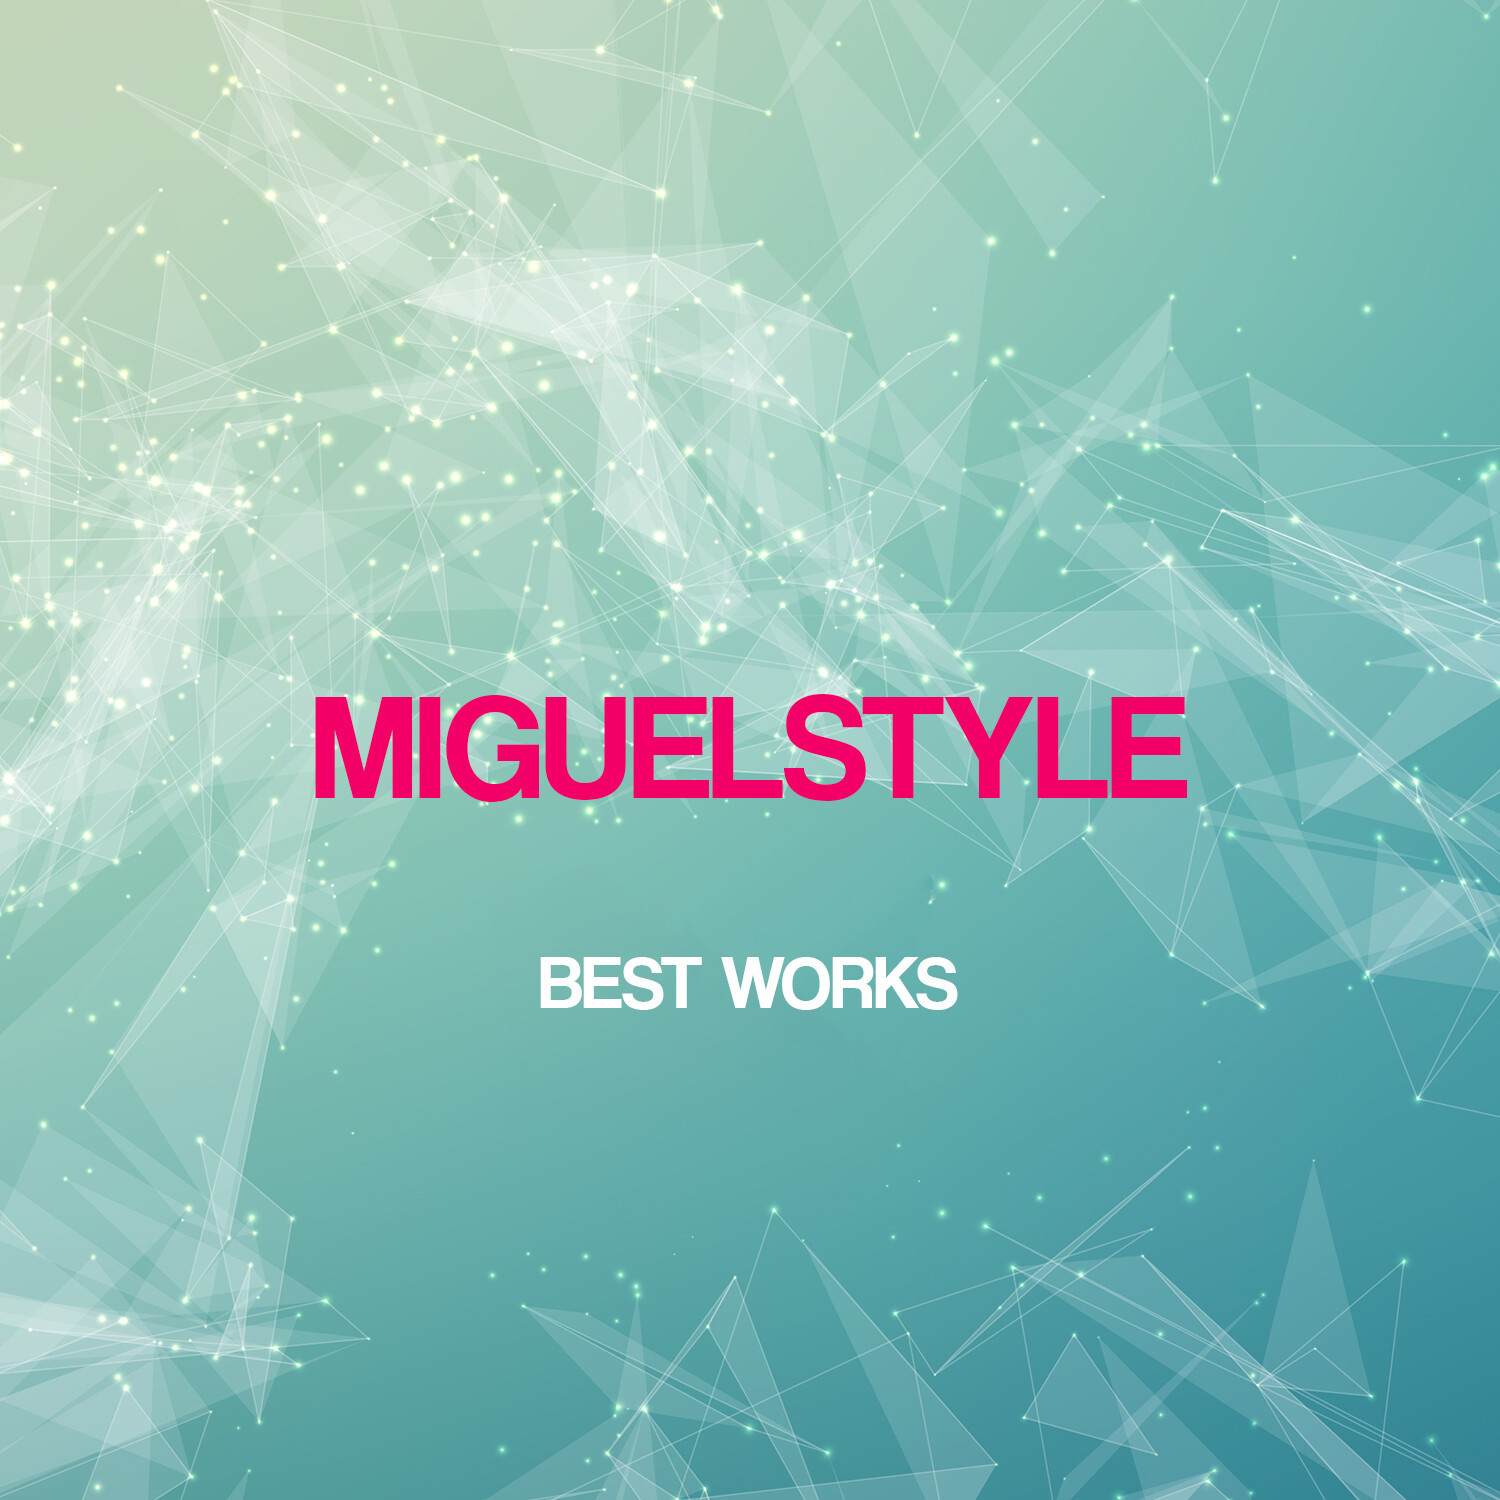 Miguelstyle Best Works